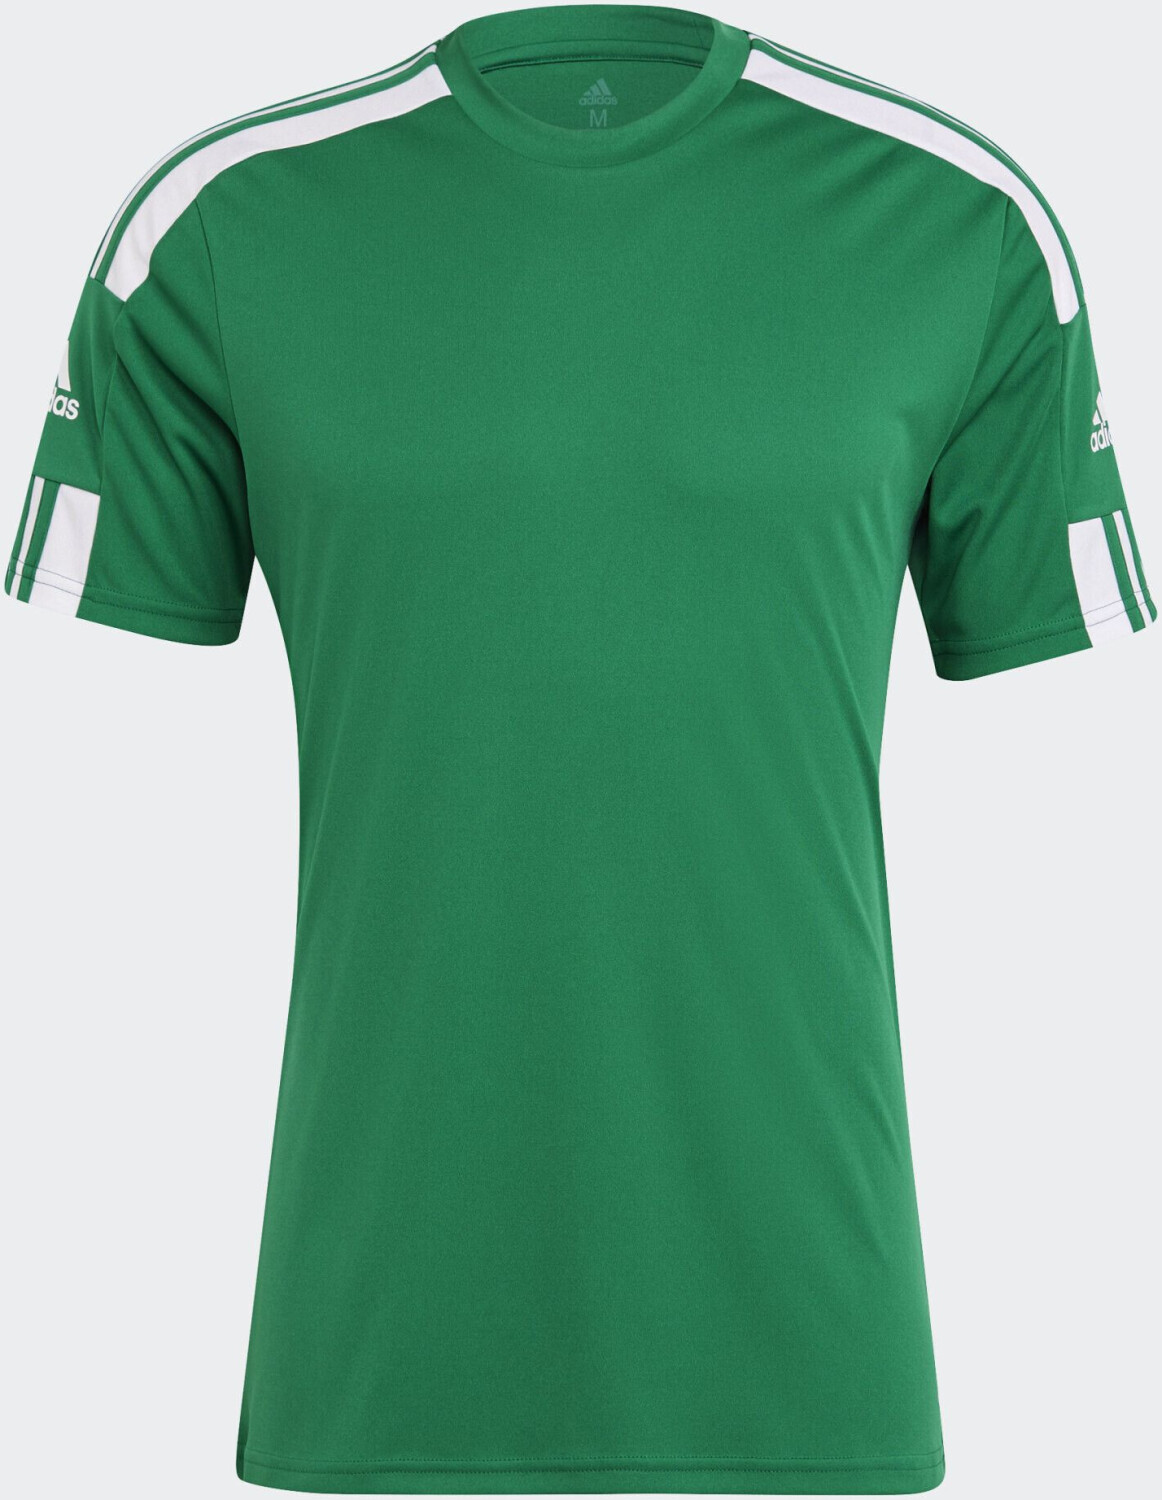 Camiseta adidas Team verde oscura